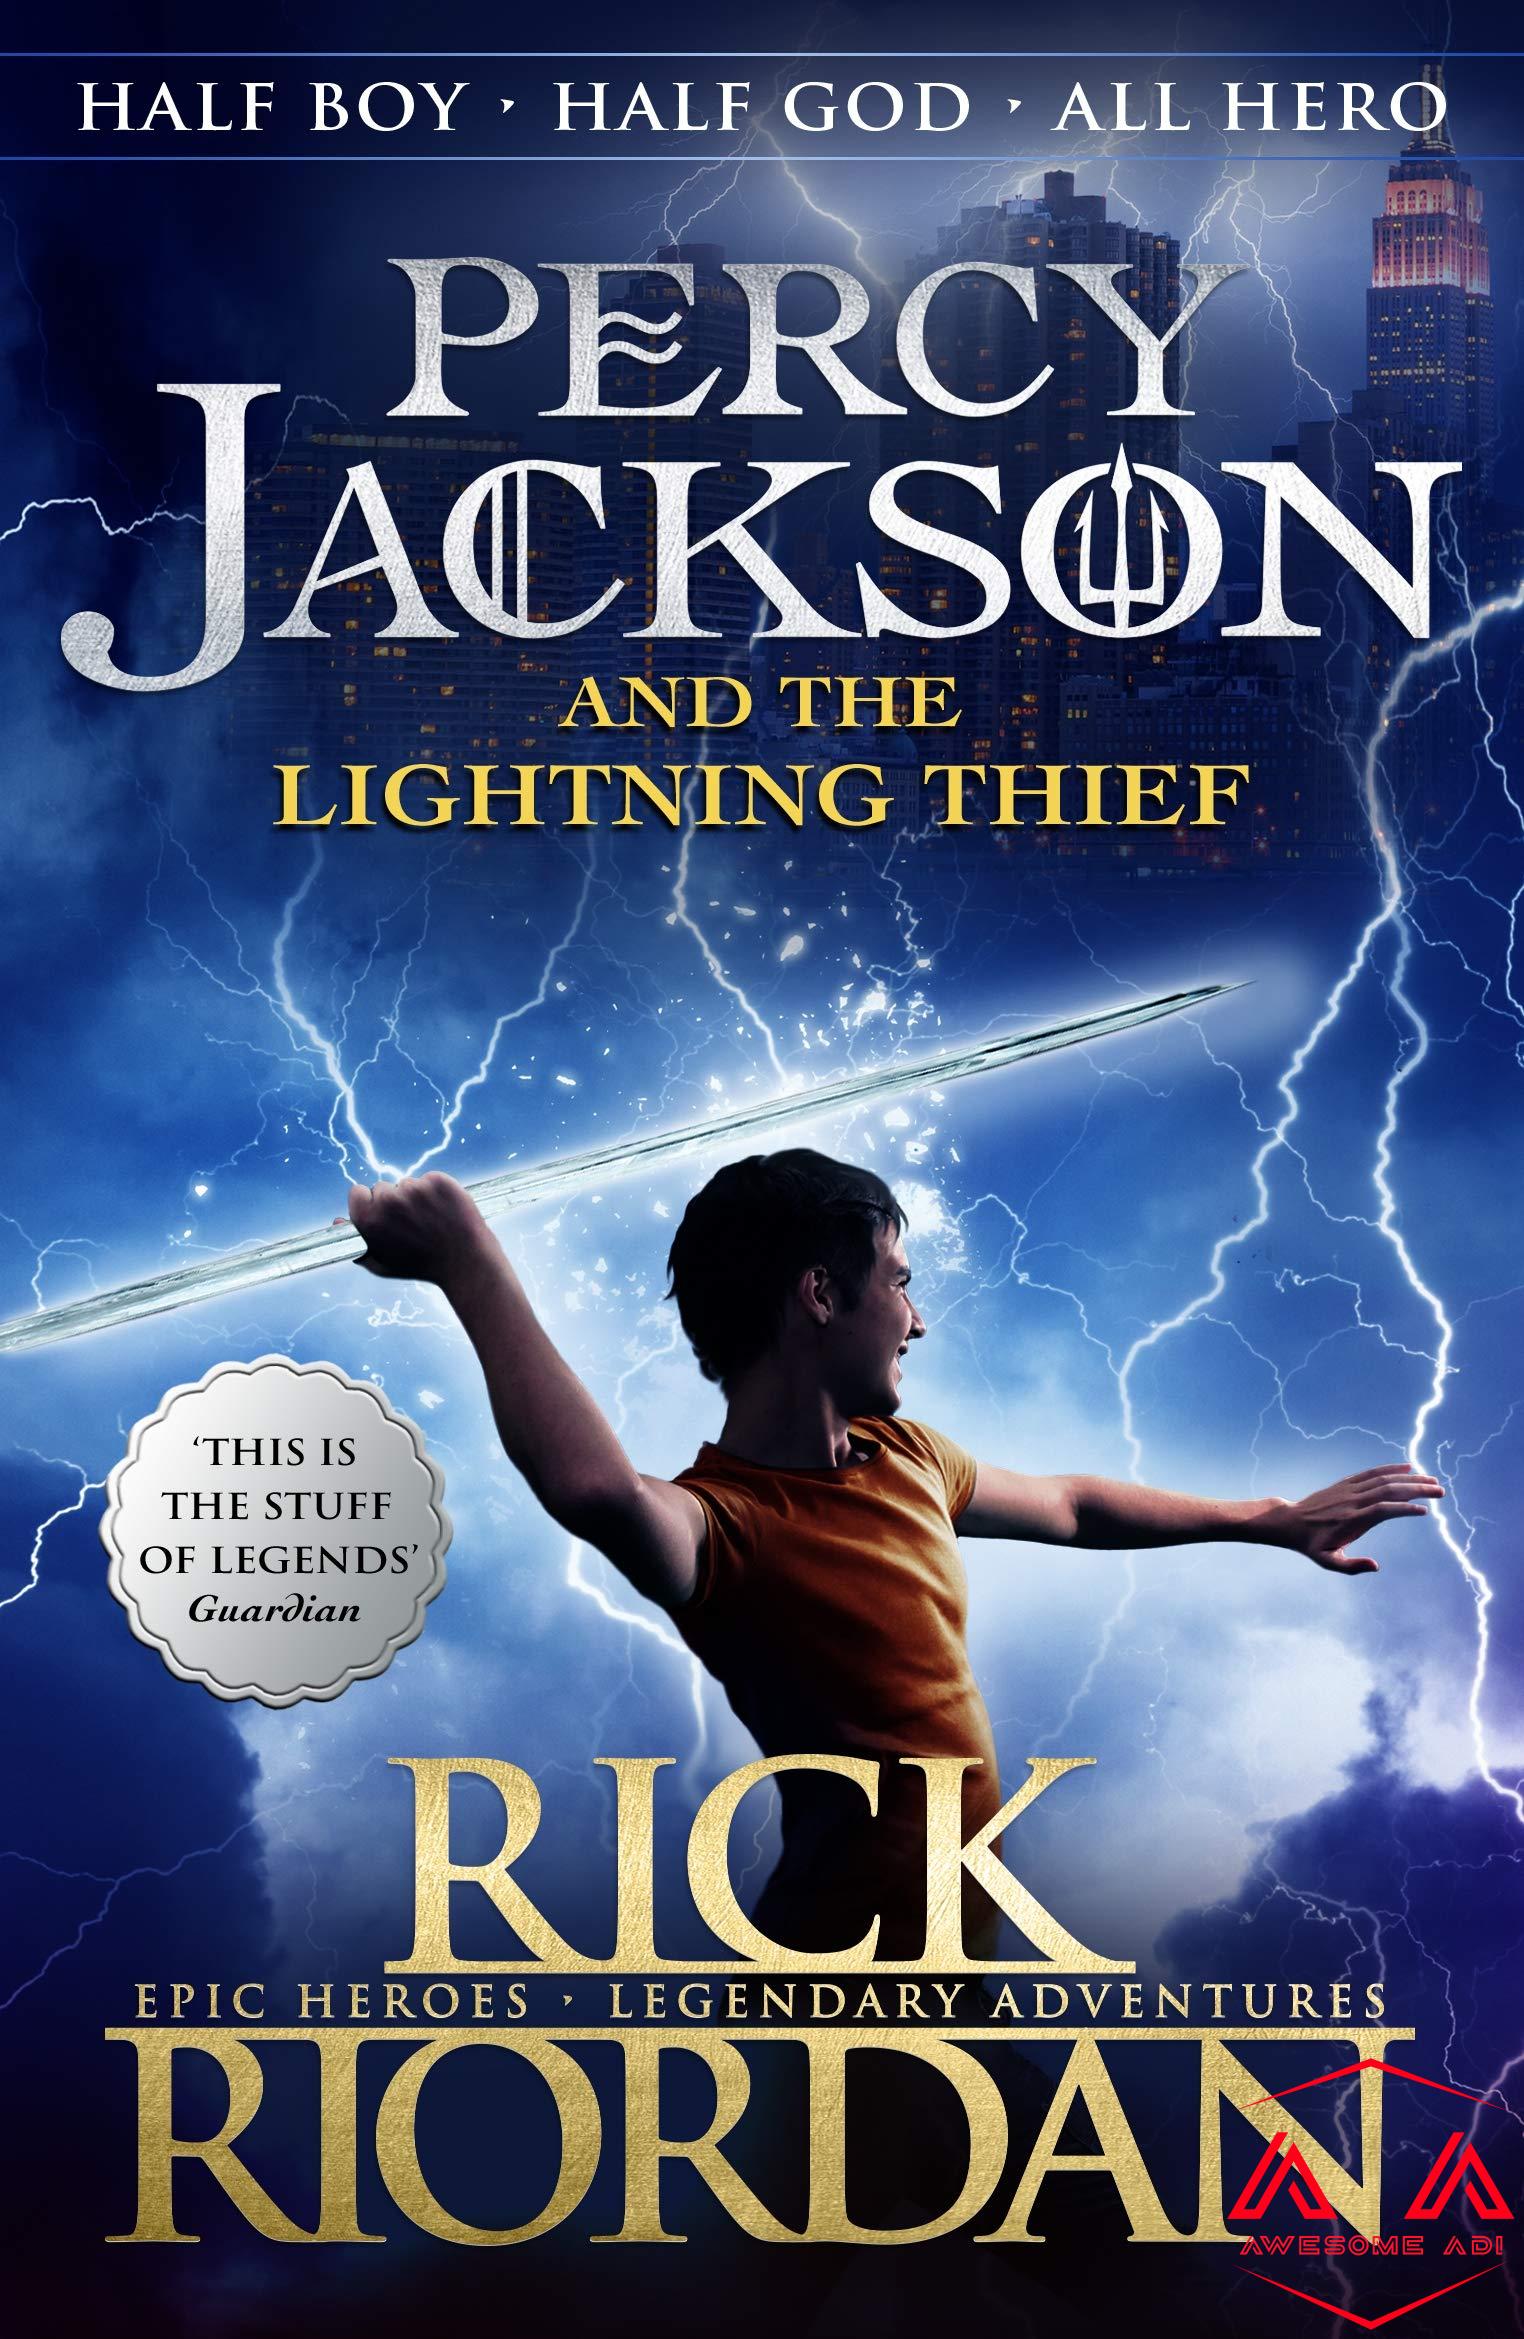 percy jackson book review essay